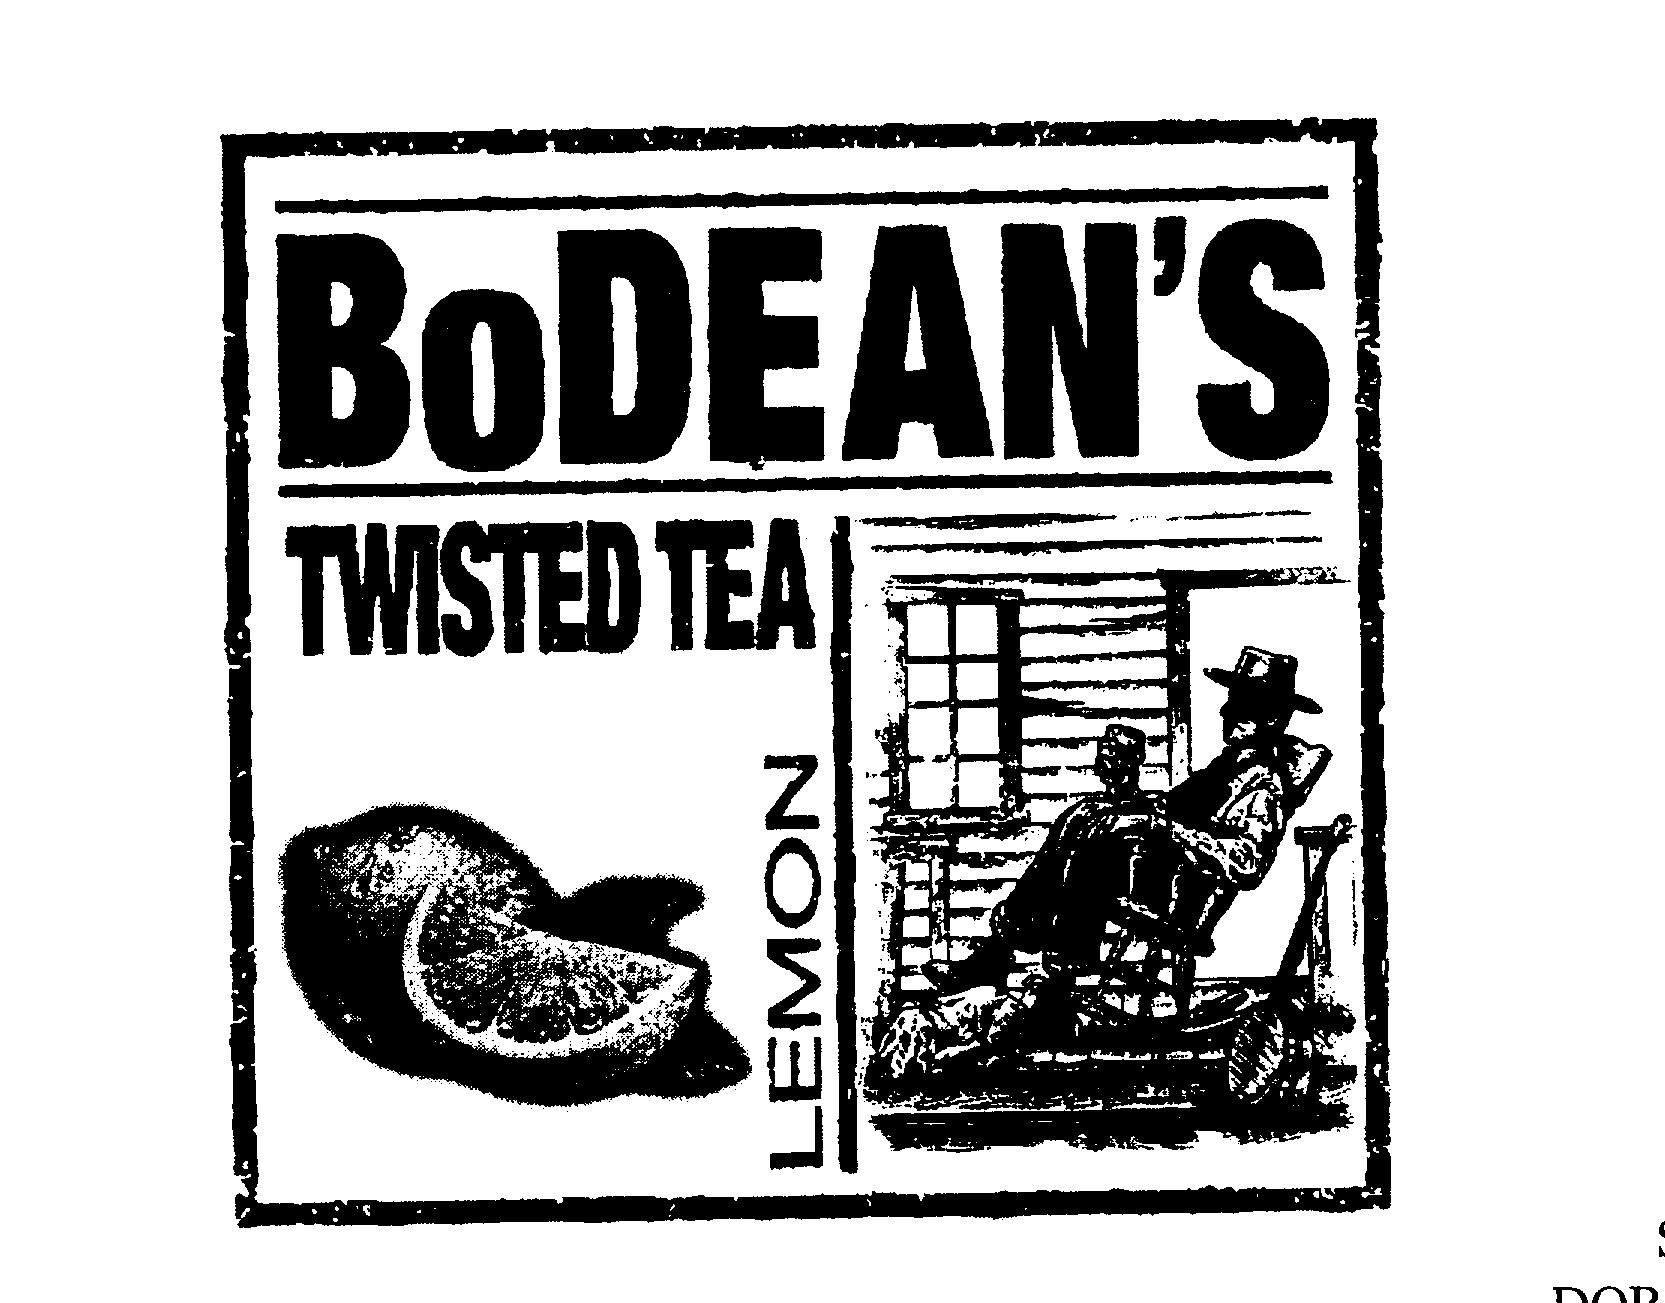  BODEAN'S TWISTED TEA LEMON